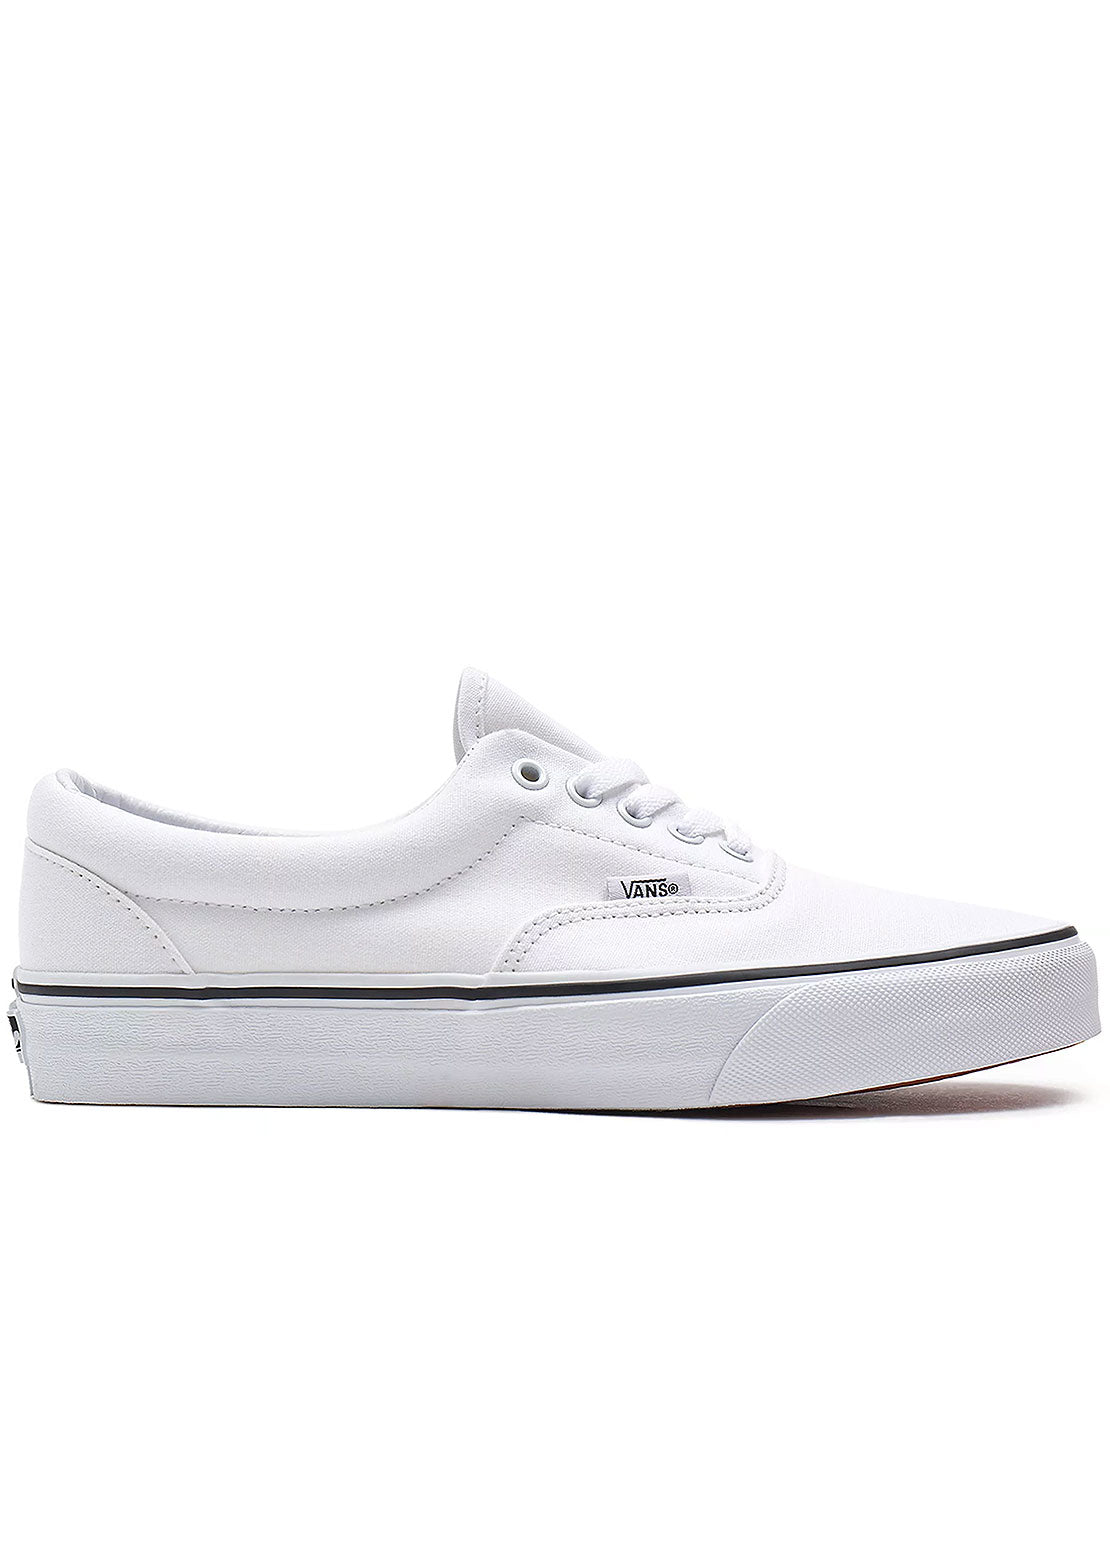 Vans Unisex Era Shoes White